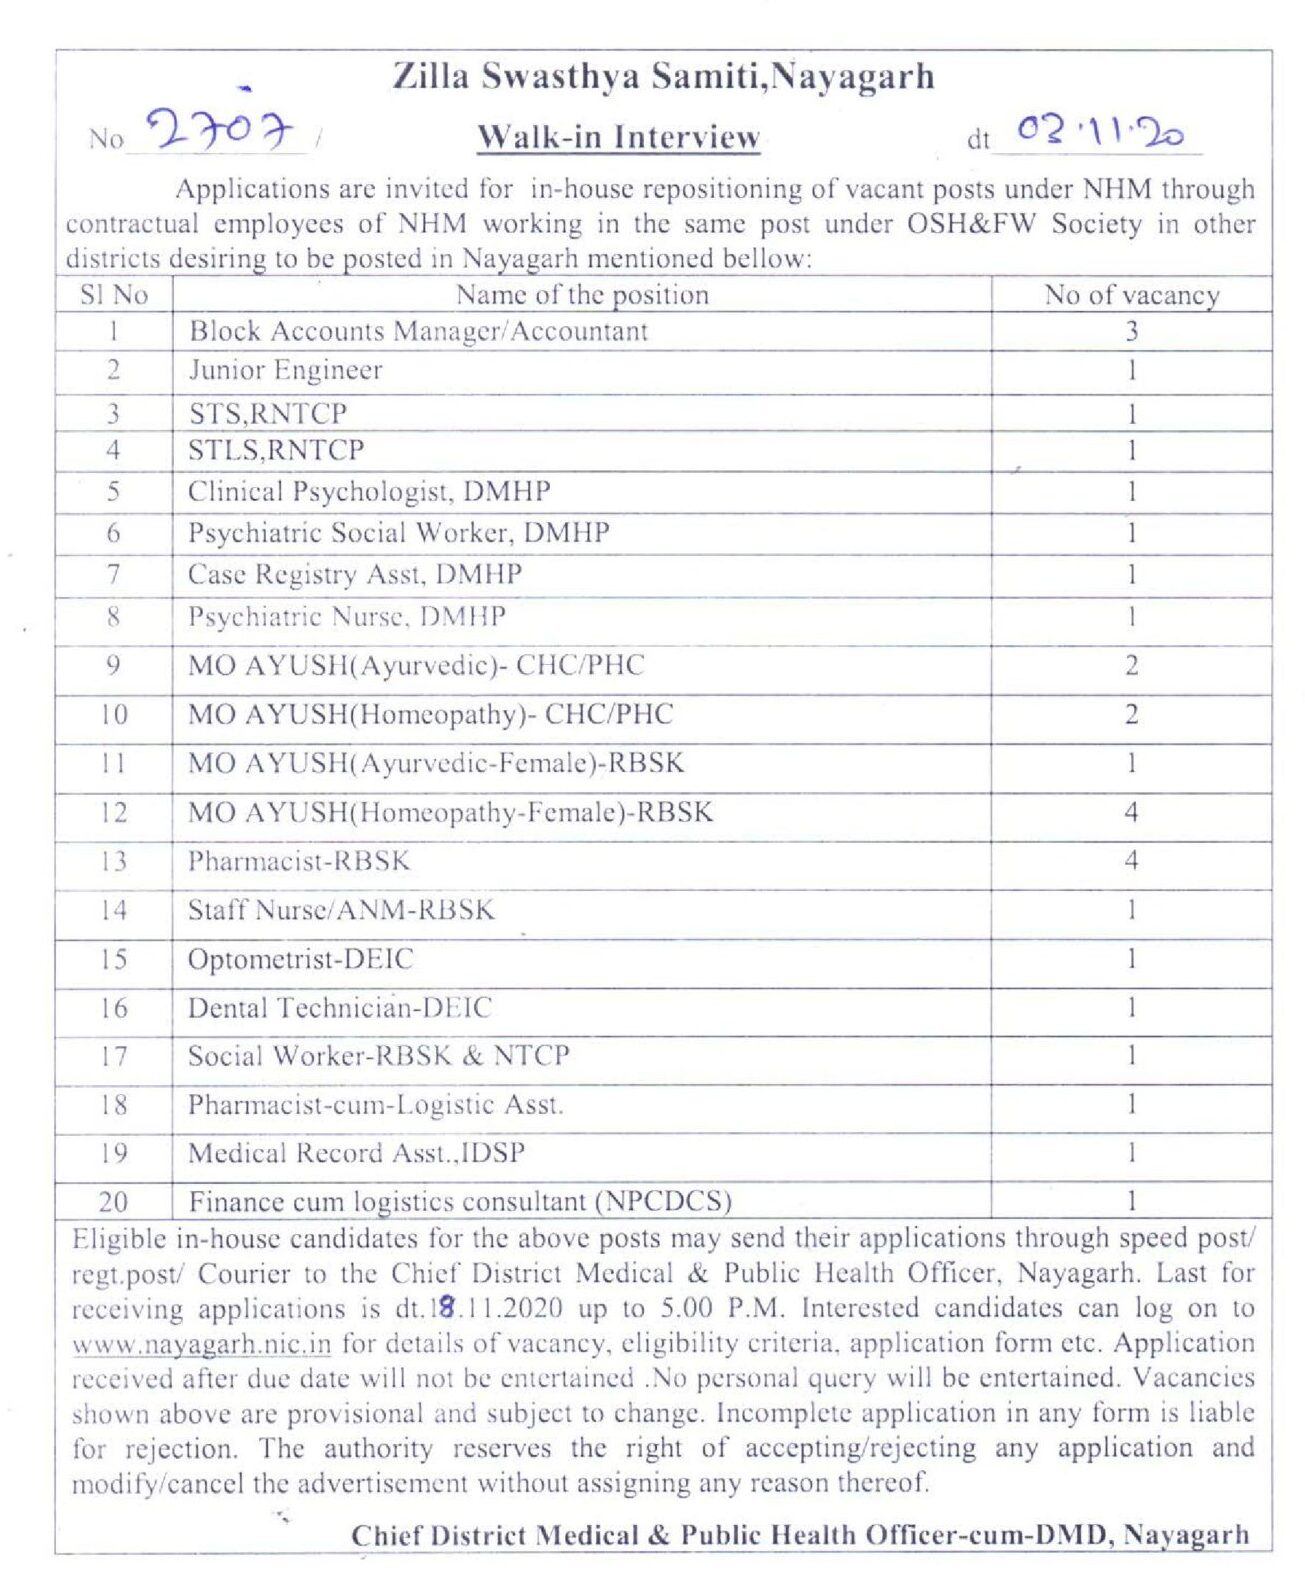 Nayagarh CDMO Office Recruitment 2020